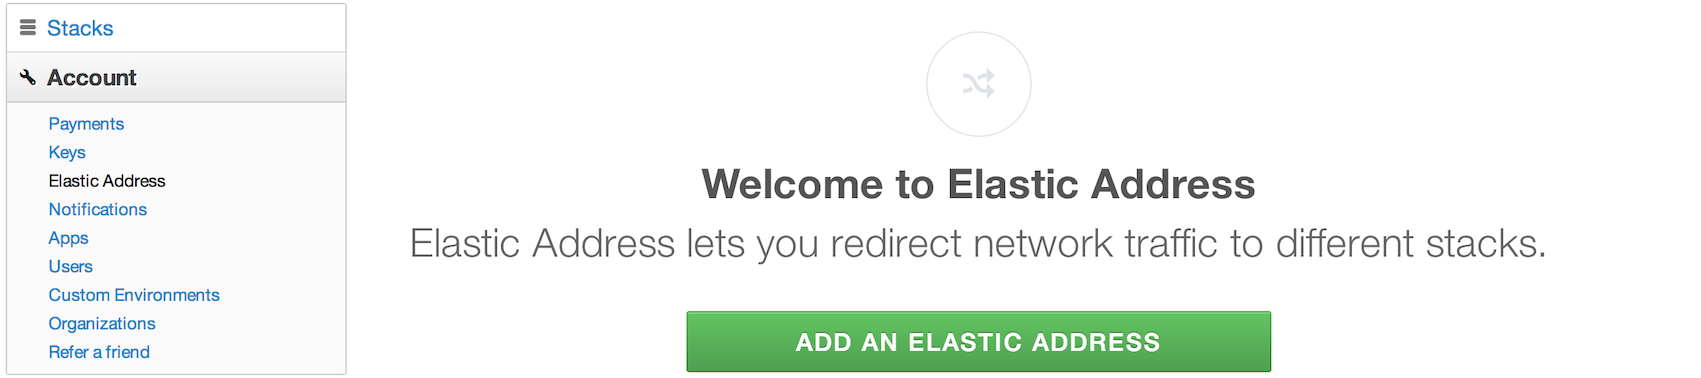 introducing-elasticaddress